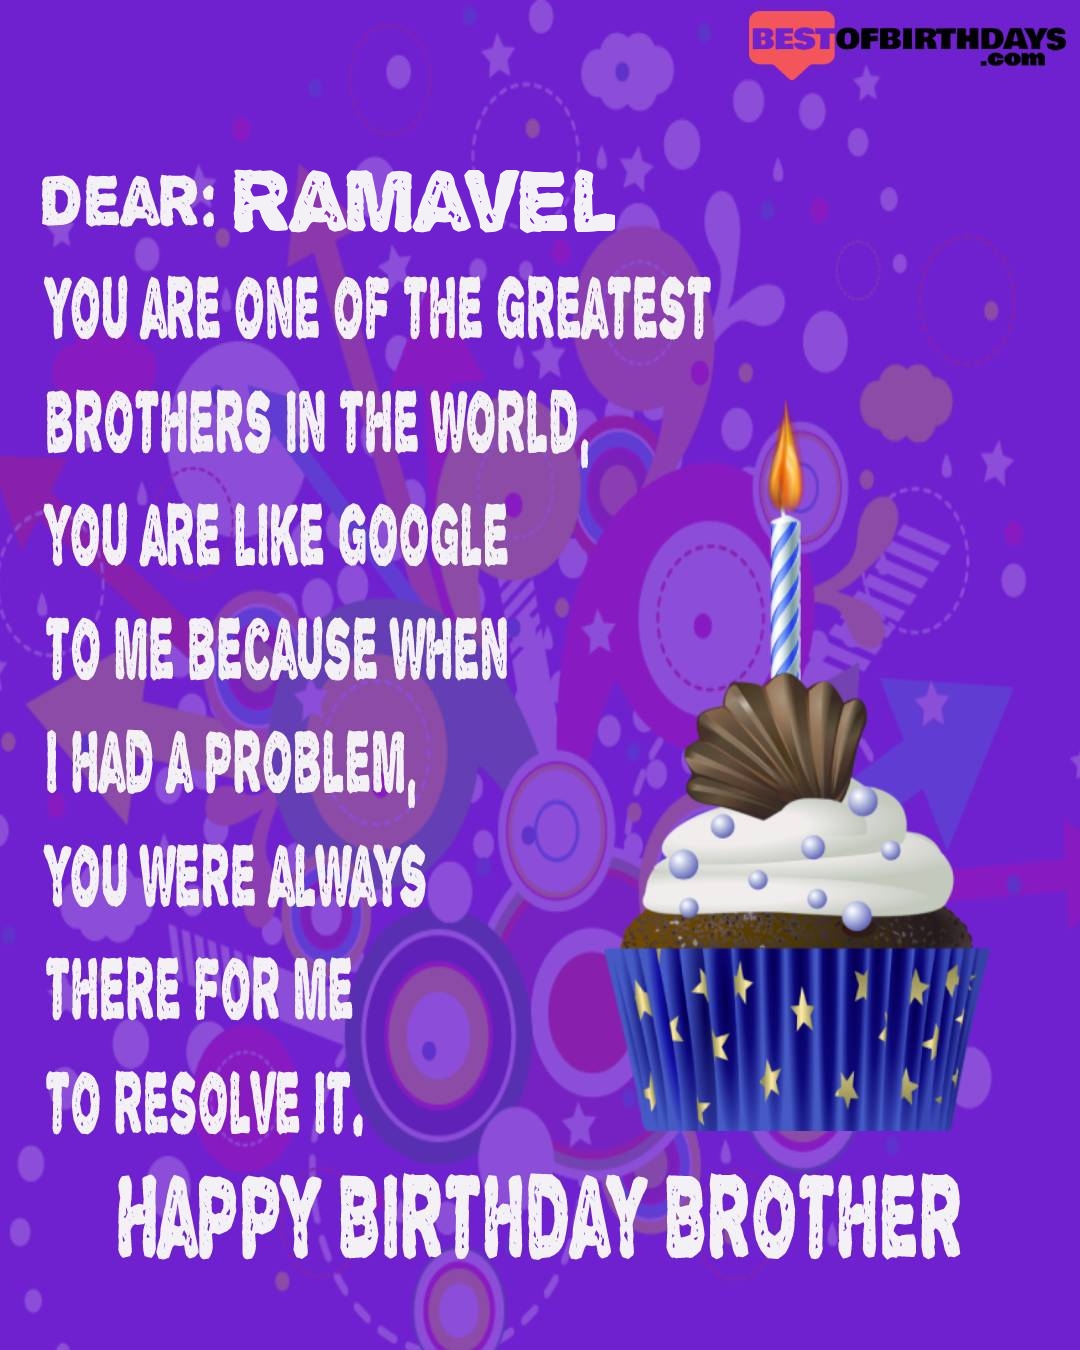 Happy birthday ramavel bhai brother bro